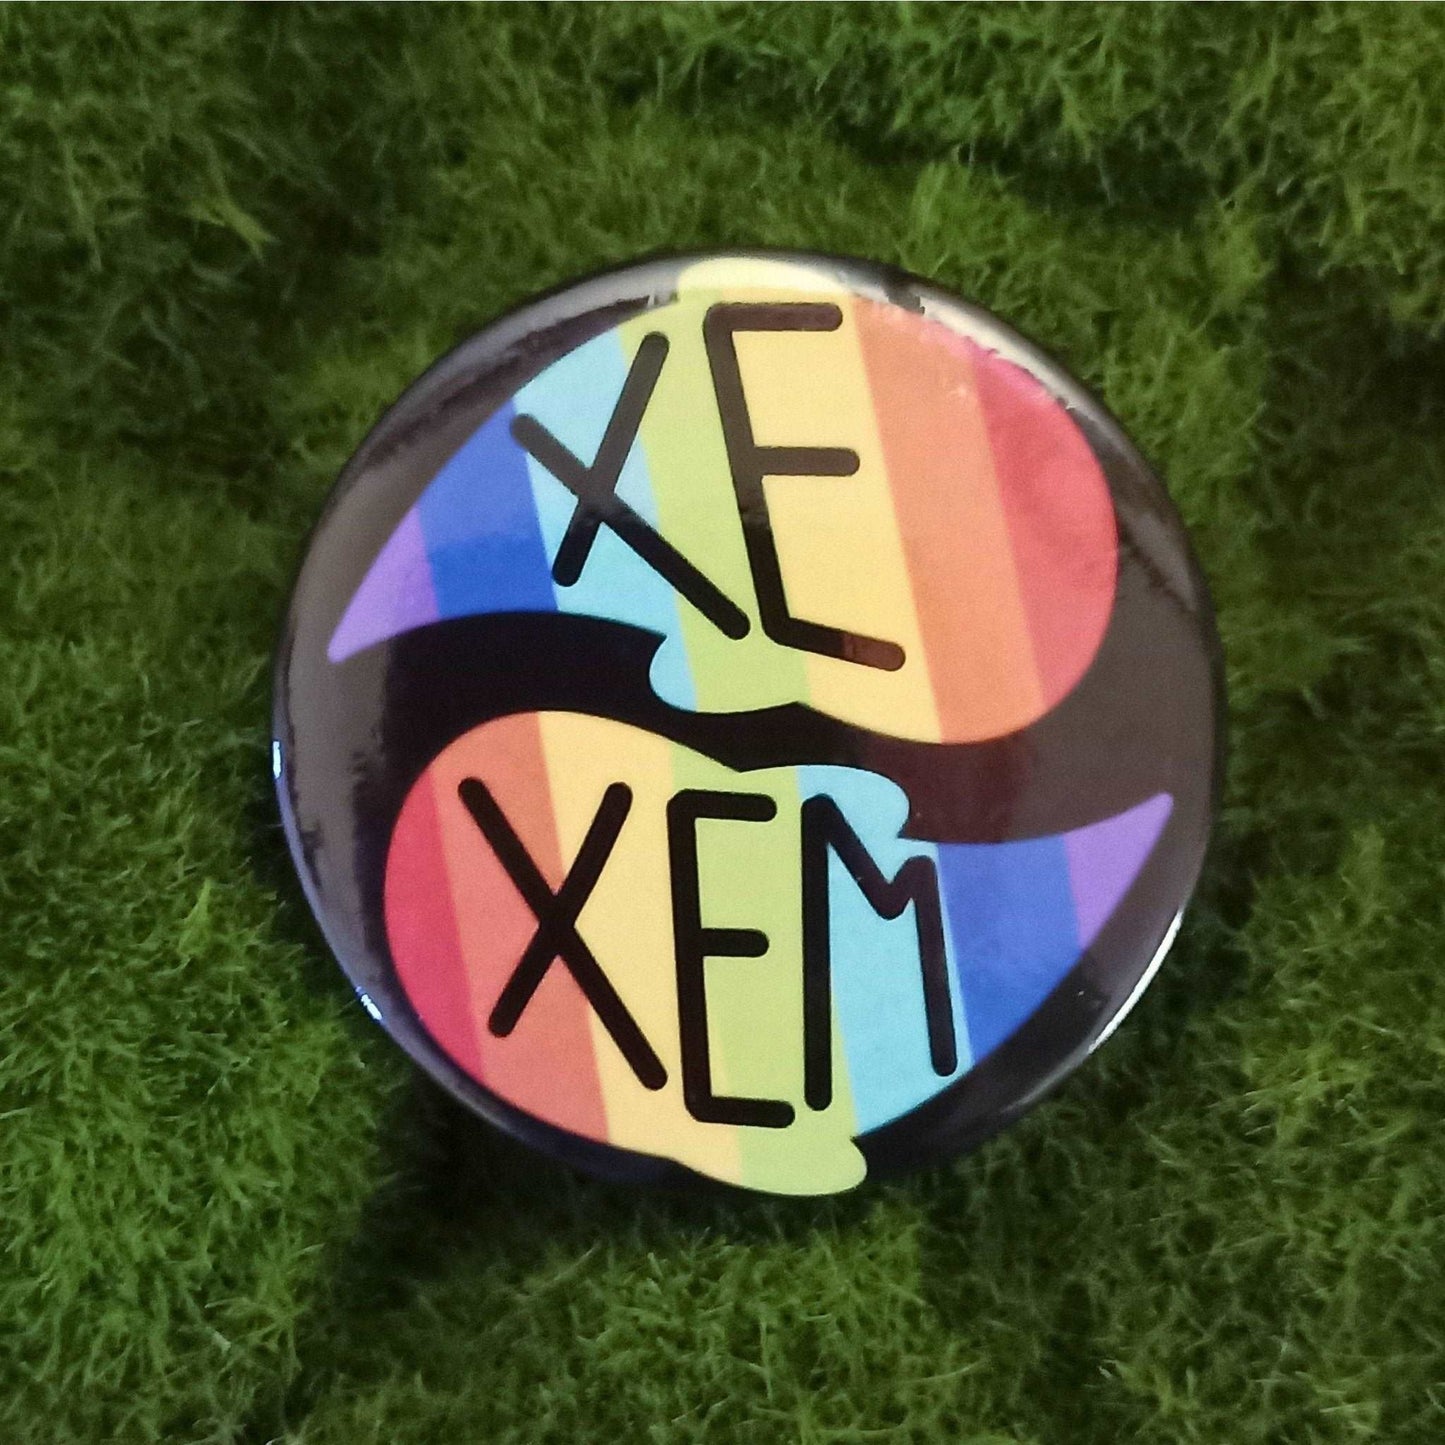 Xe / Xem Pronoun Button | DevKrea - Deviantkreations